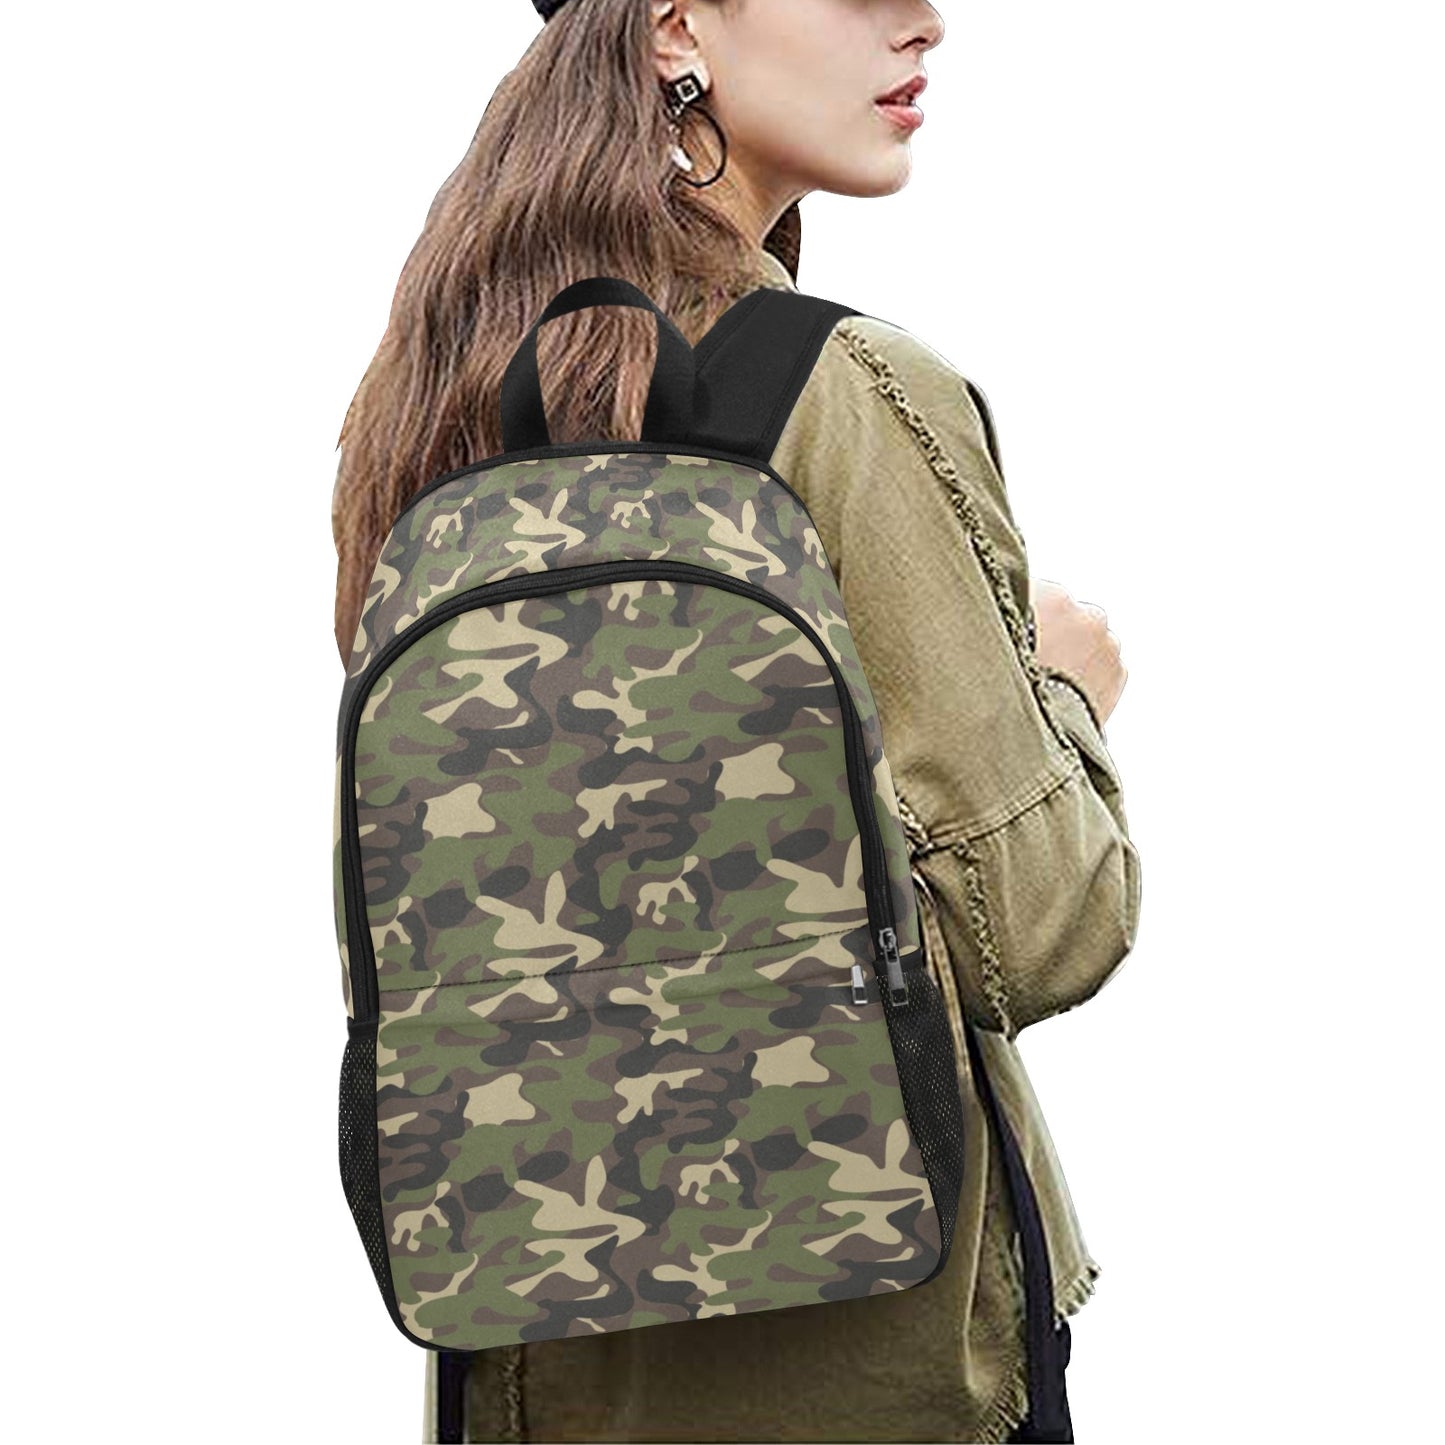 Camo Backpack, Camouflage Green Army Men Women Kids Gift Him Her School College Waterproof Side Mesh Pockets Aesthetic Bag